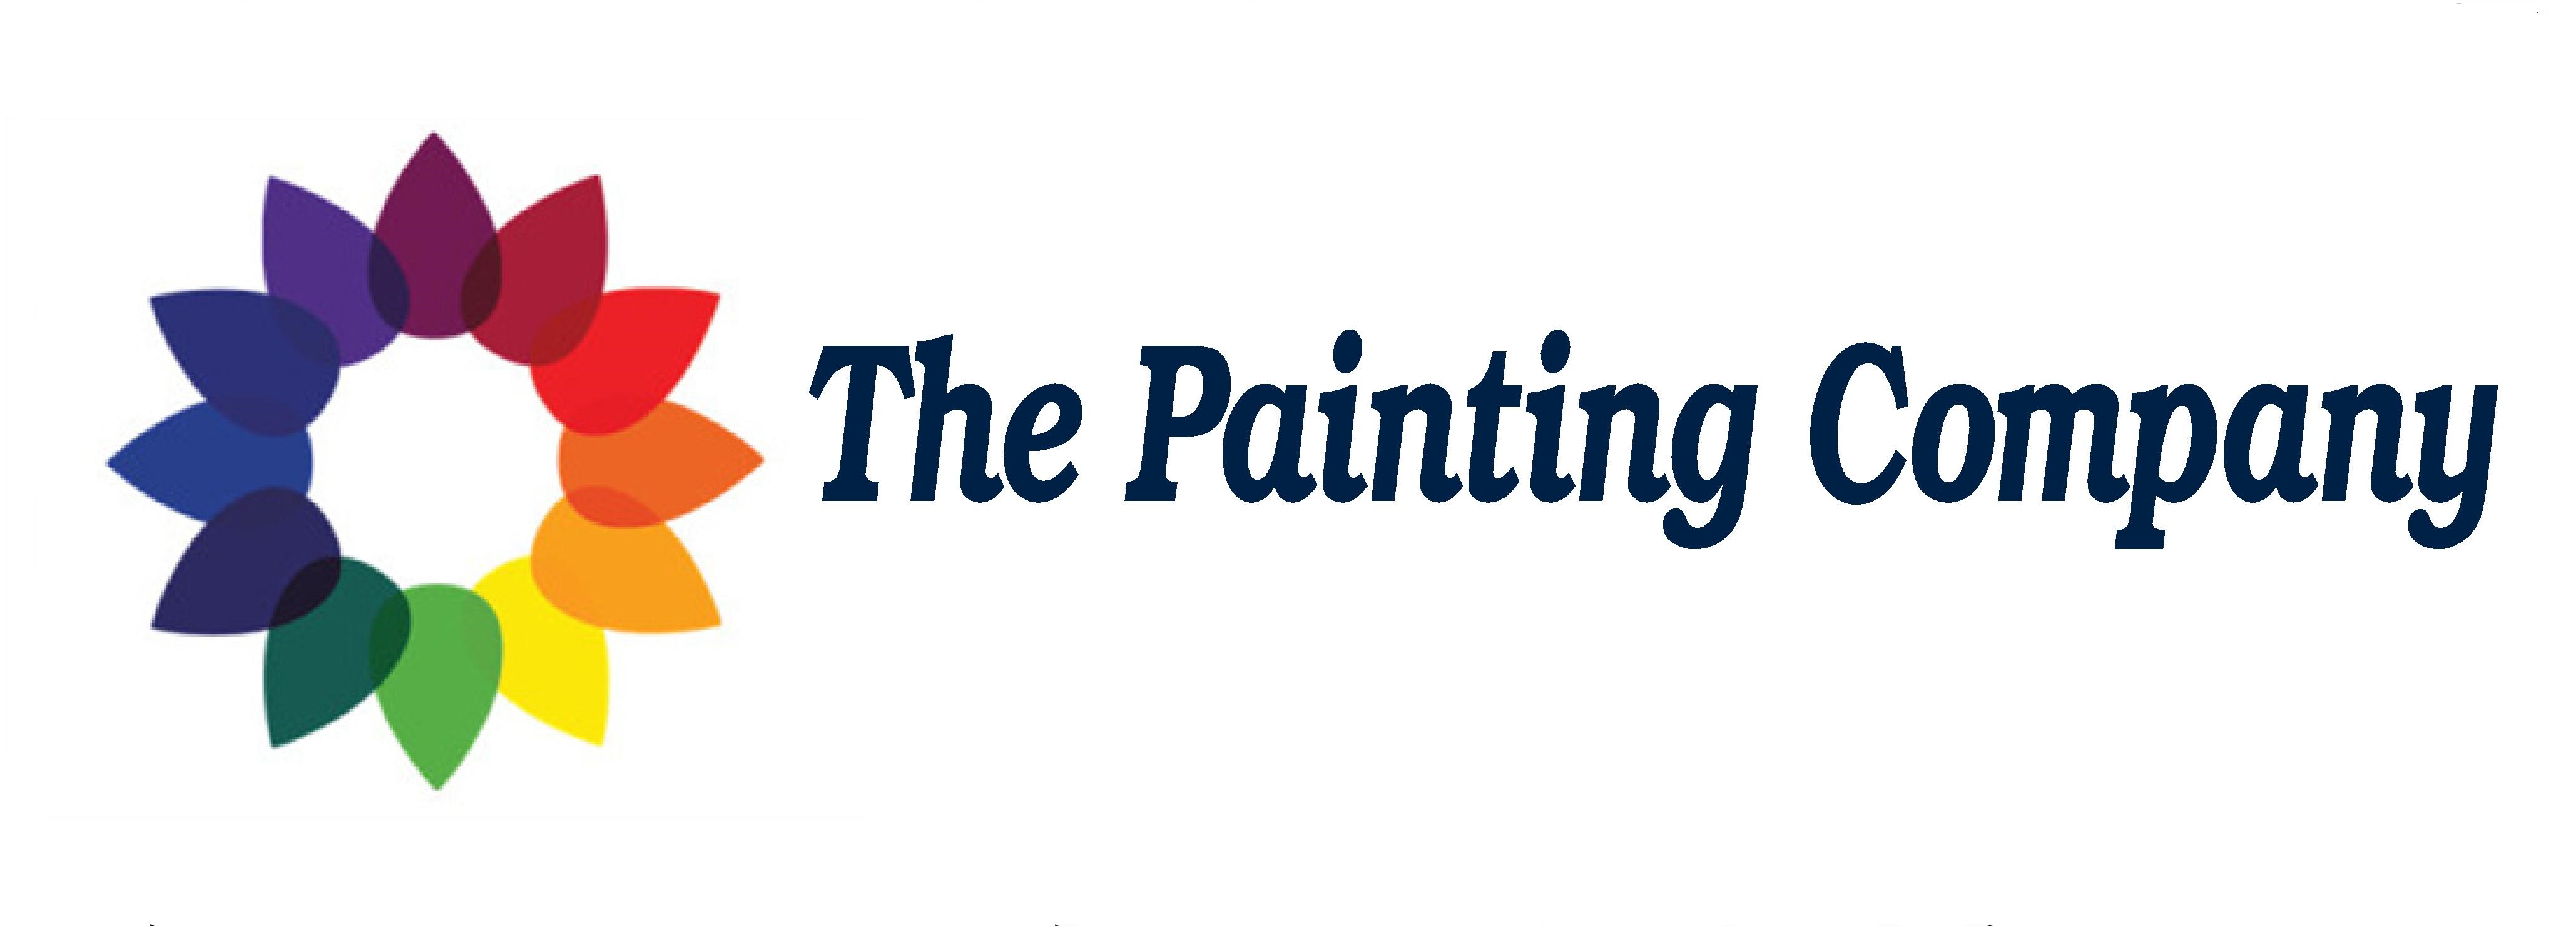 The-Painting-Company-2-1.jpg